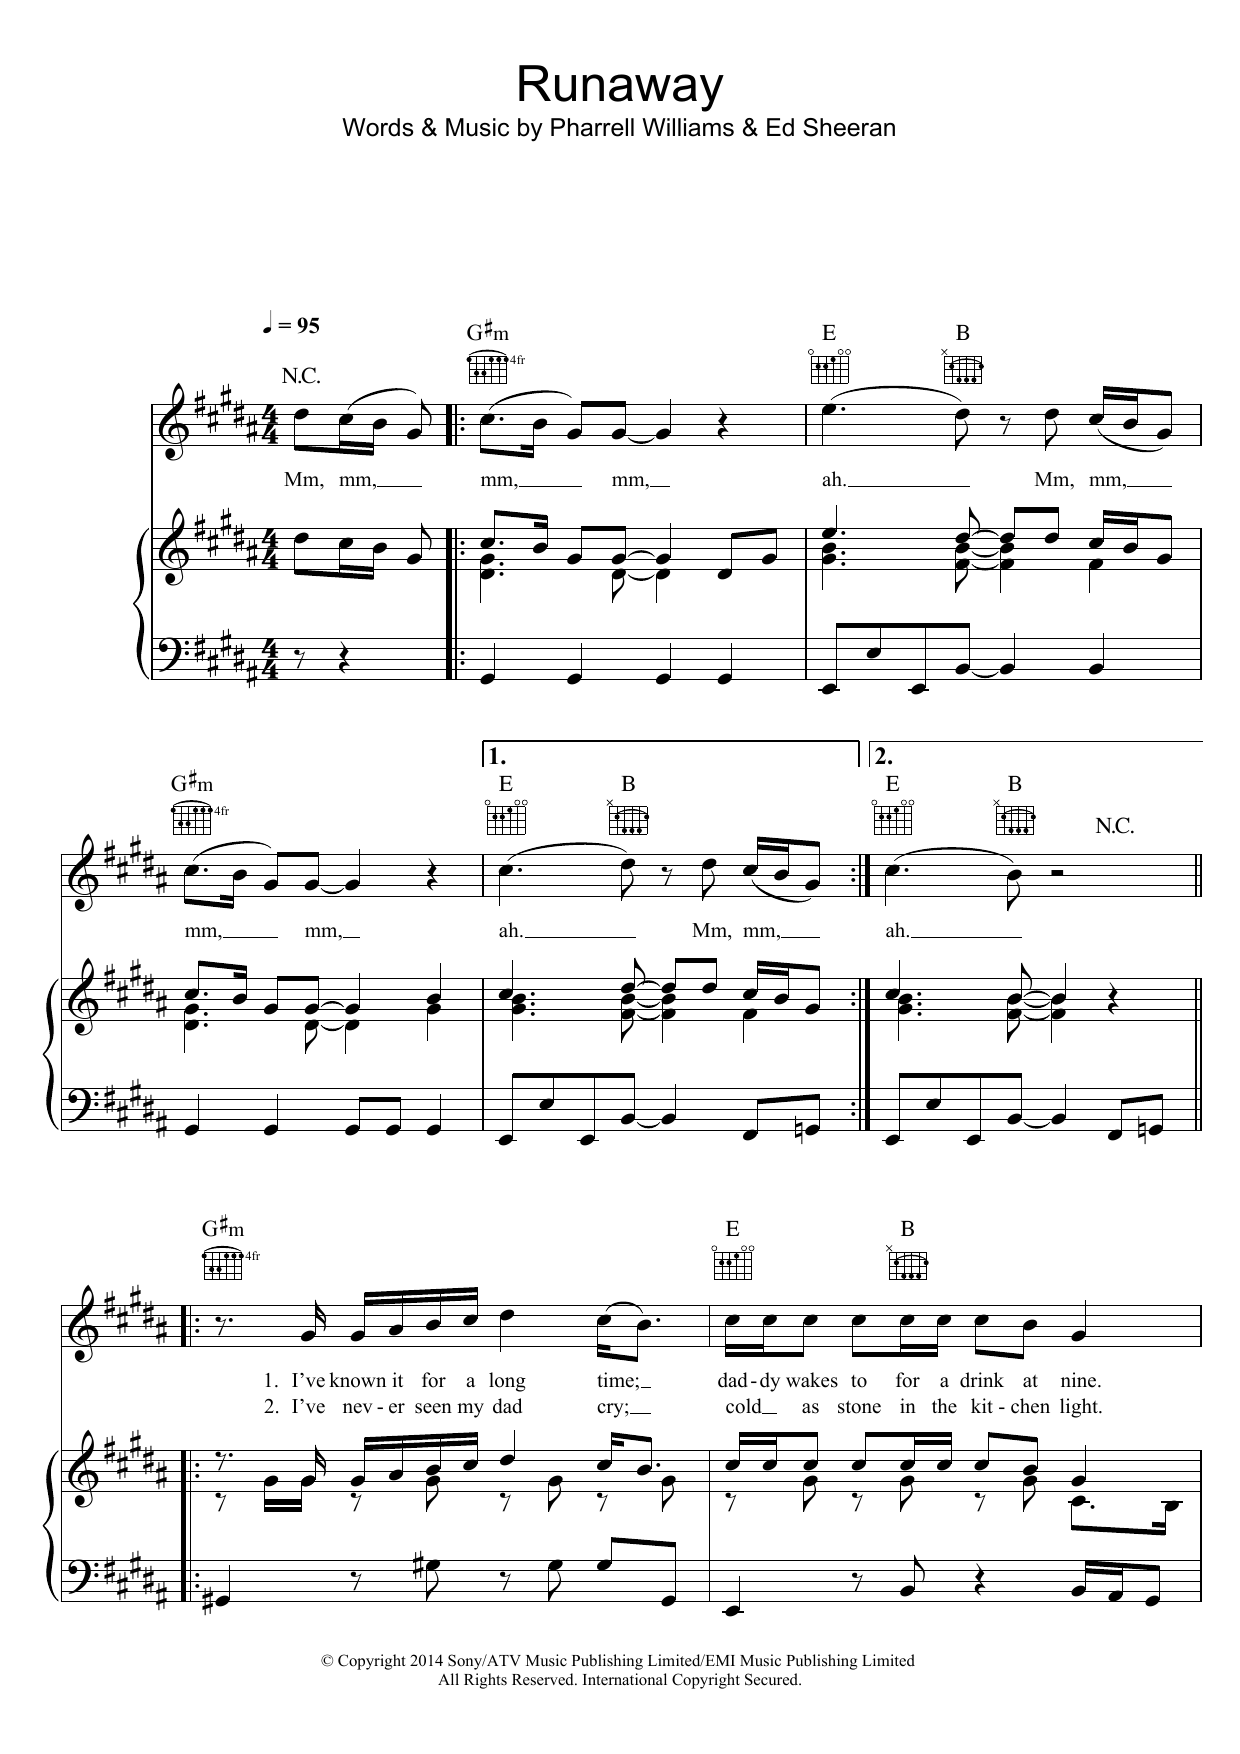 Ed Sheeran Runaway Sheet Music Notes & Chords for Guitar Tab - Download or Print PDF